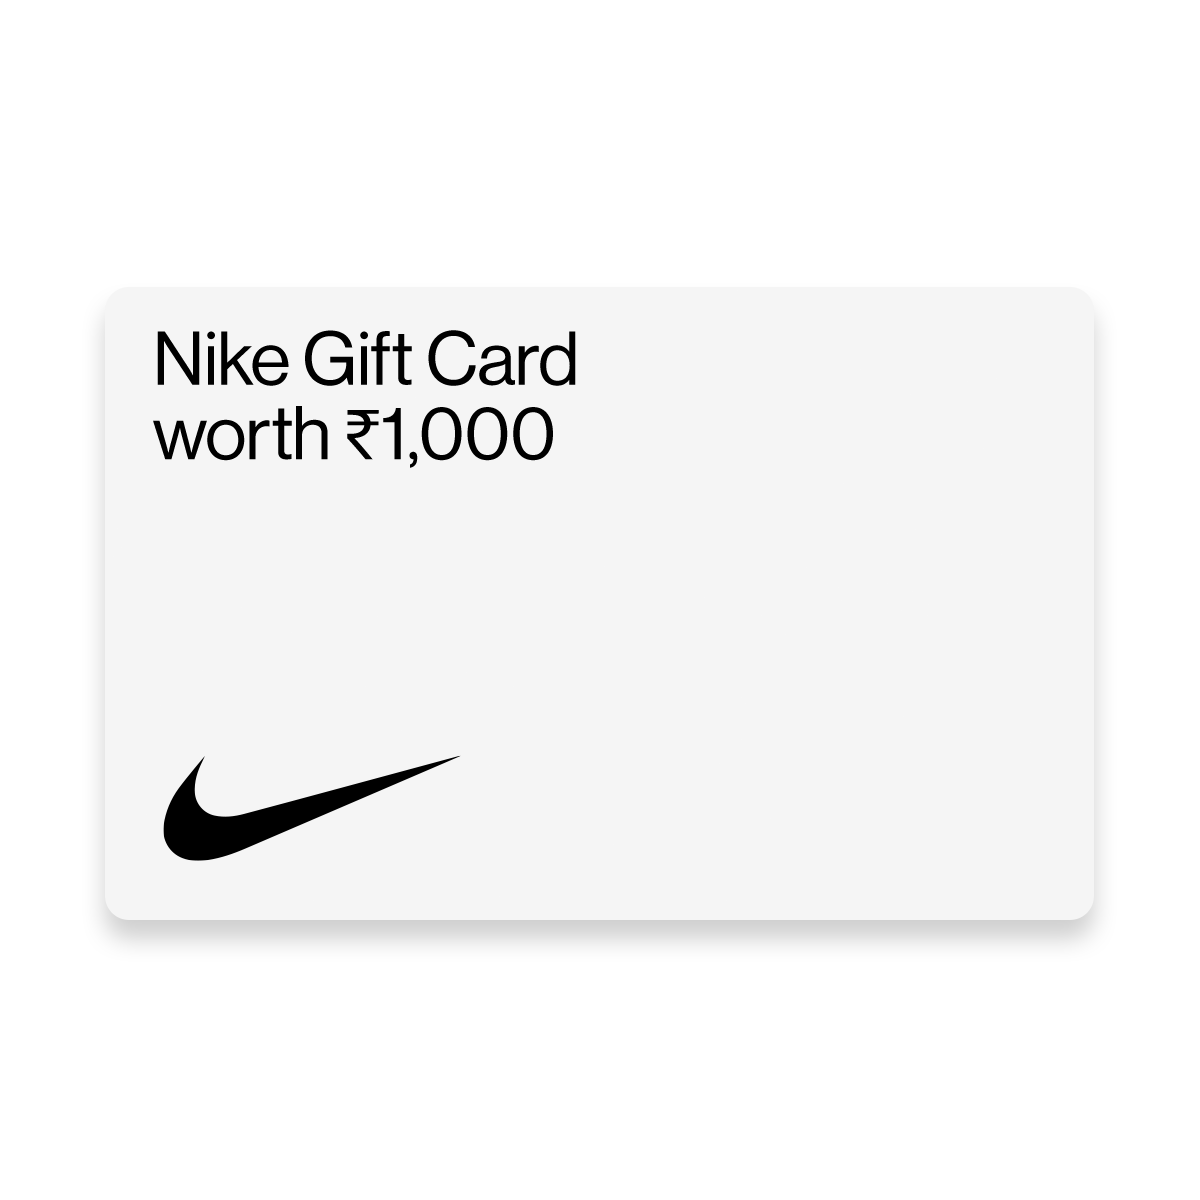 Визитная карточка Nike. Карта Nike. Гифт карта найк. Подарочный сертификат найк. Треки найк